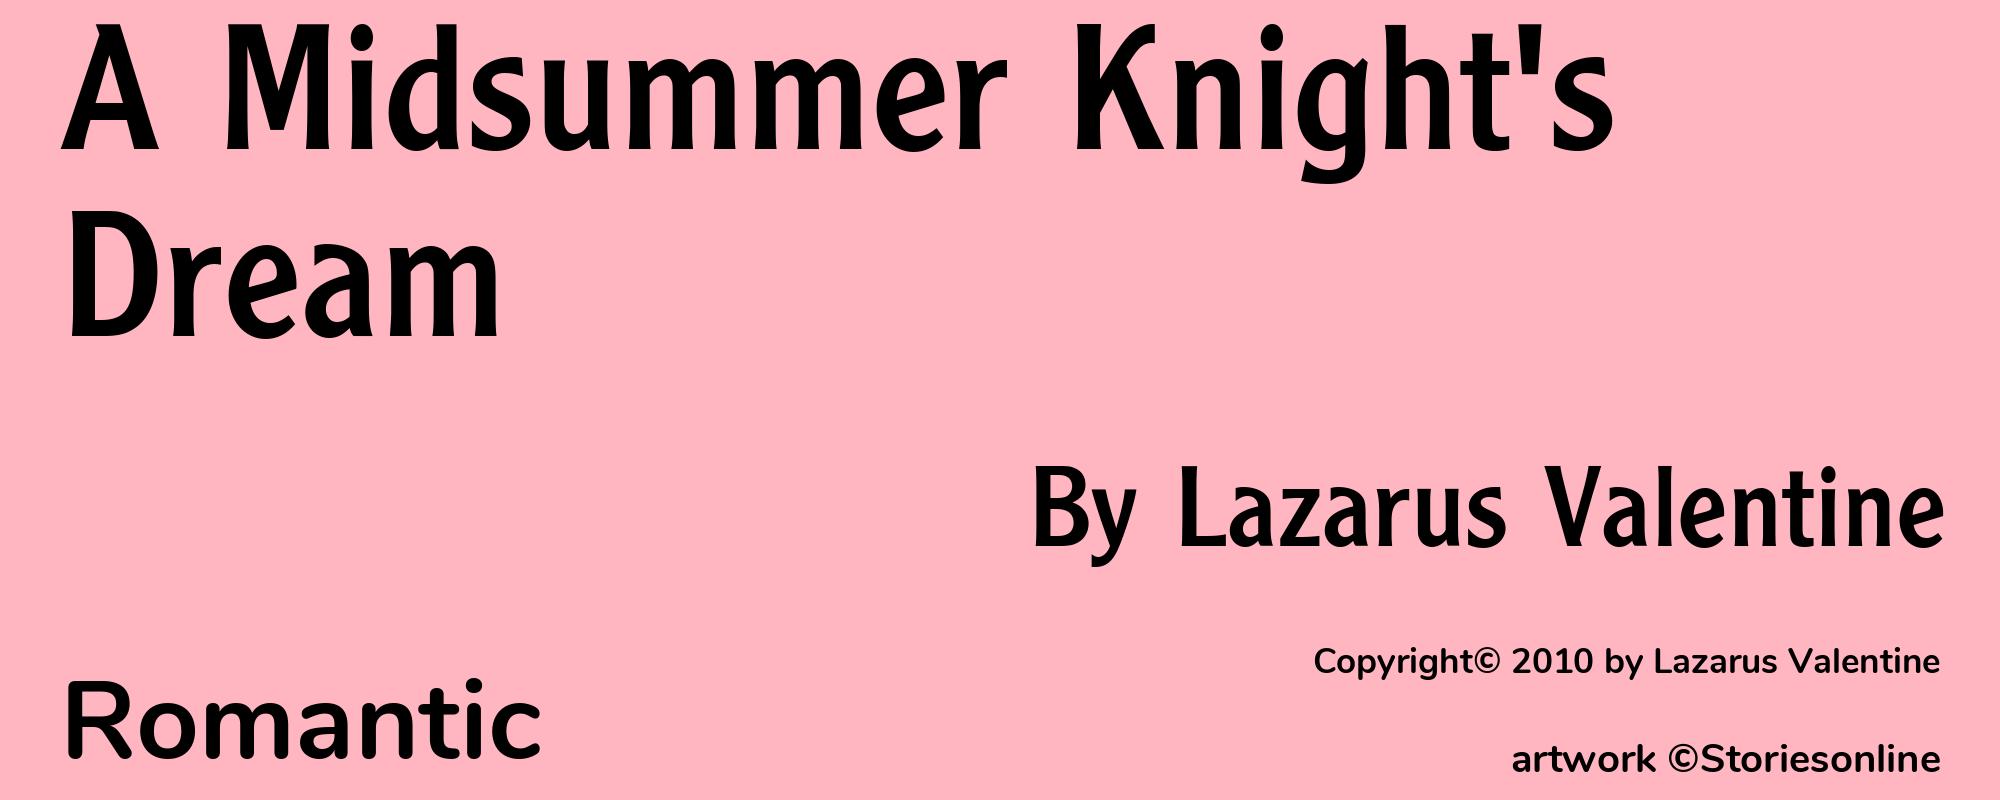 A Midsummer Knight's Dream - Cover